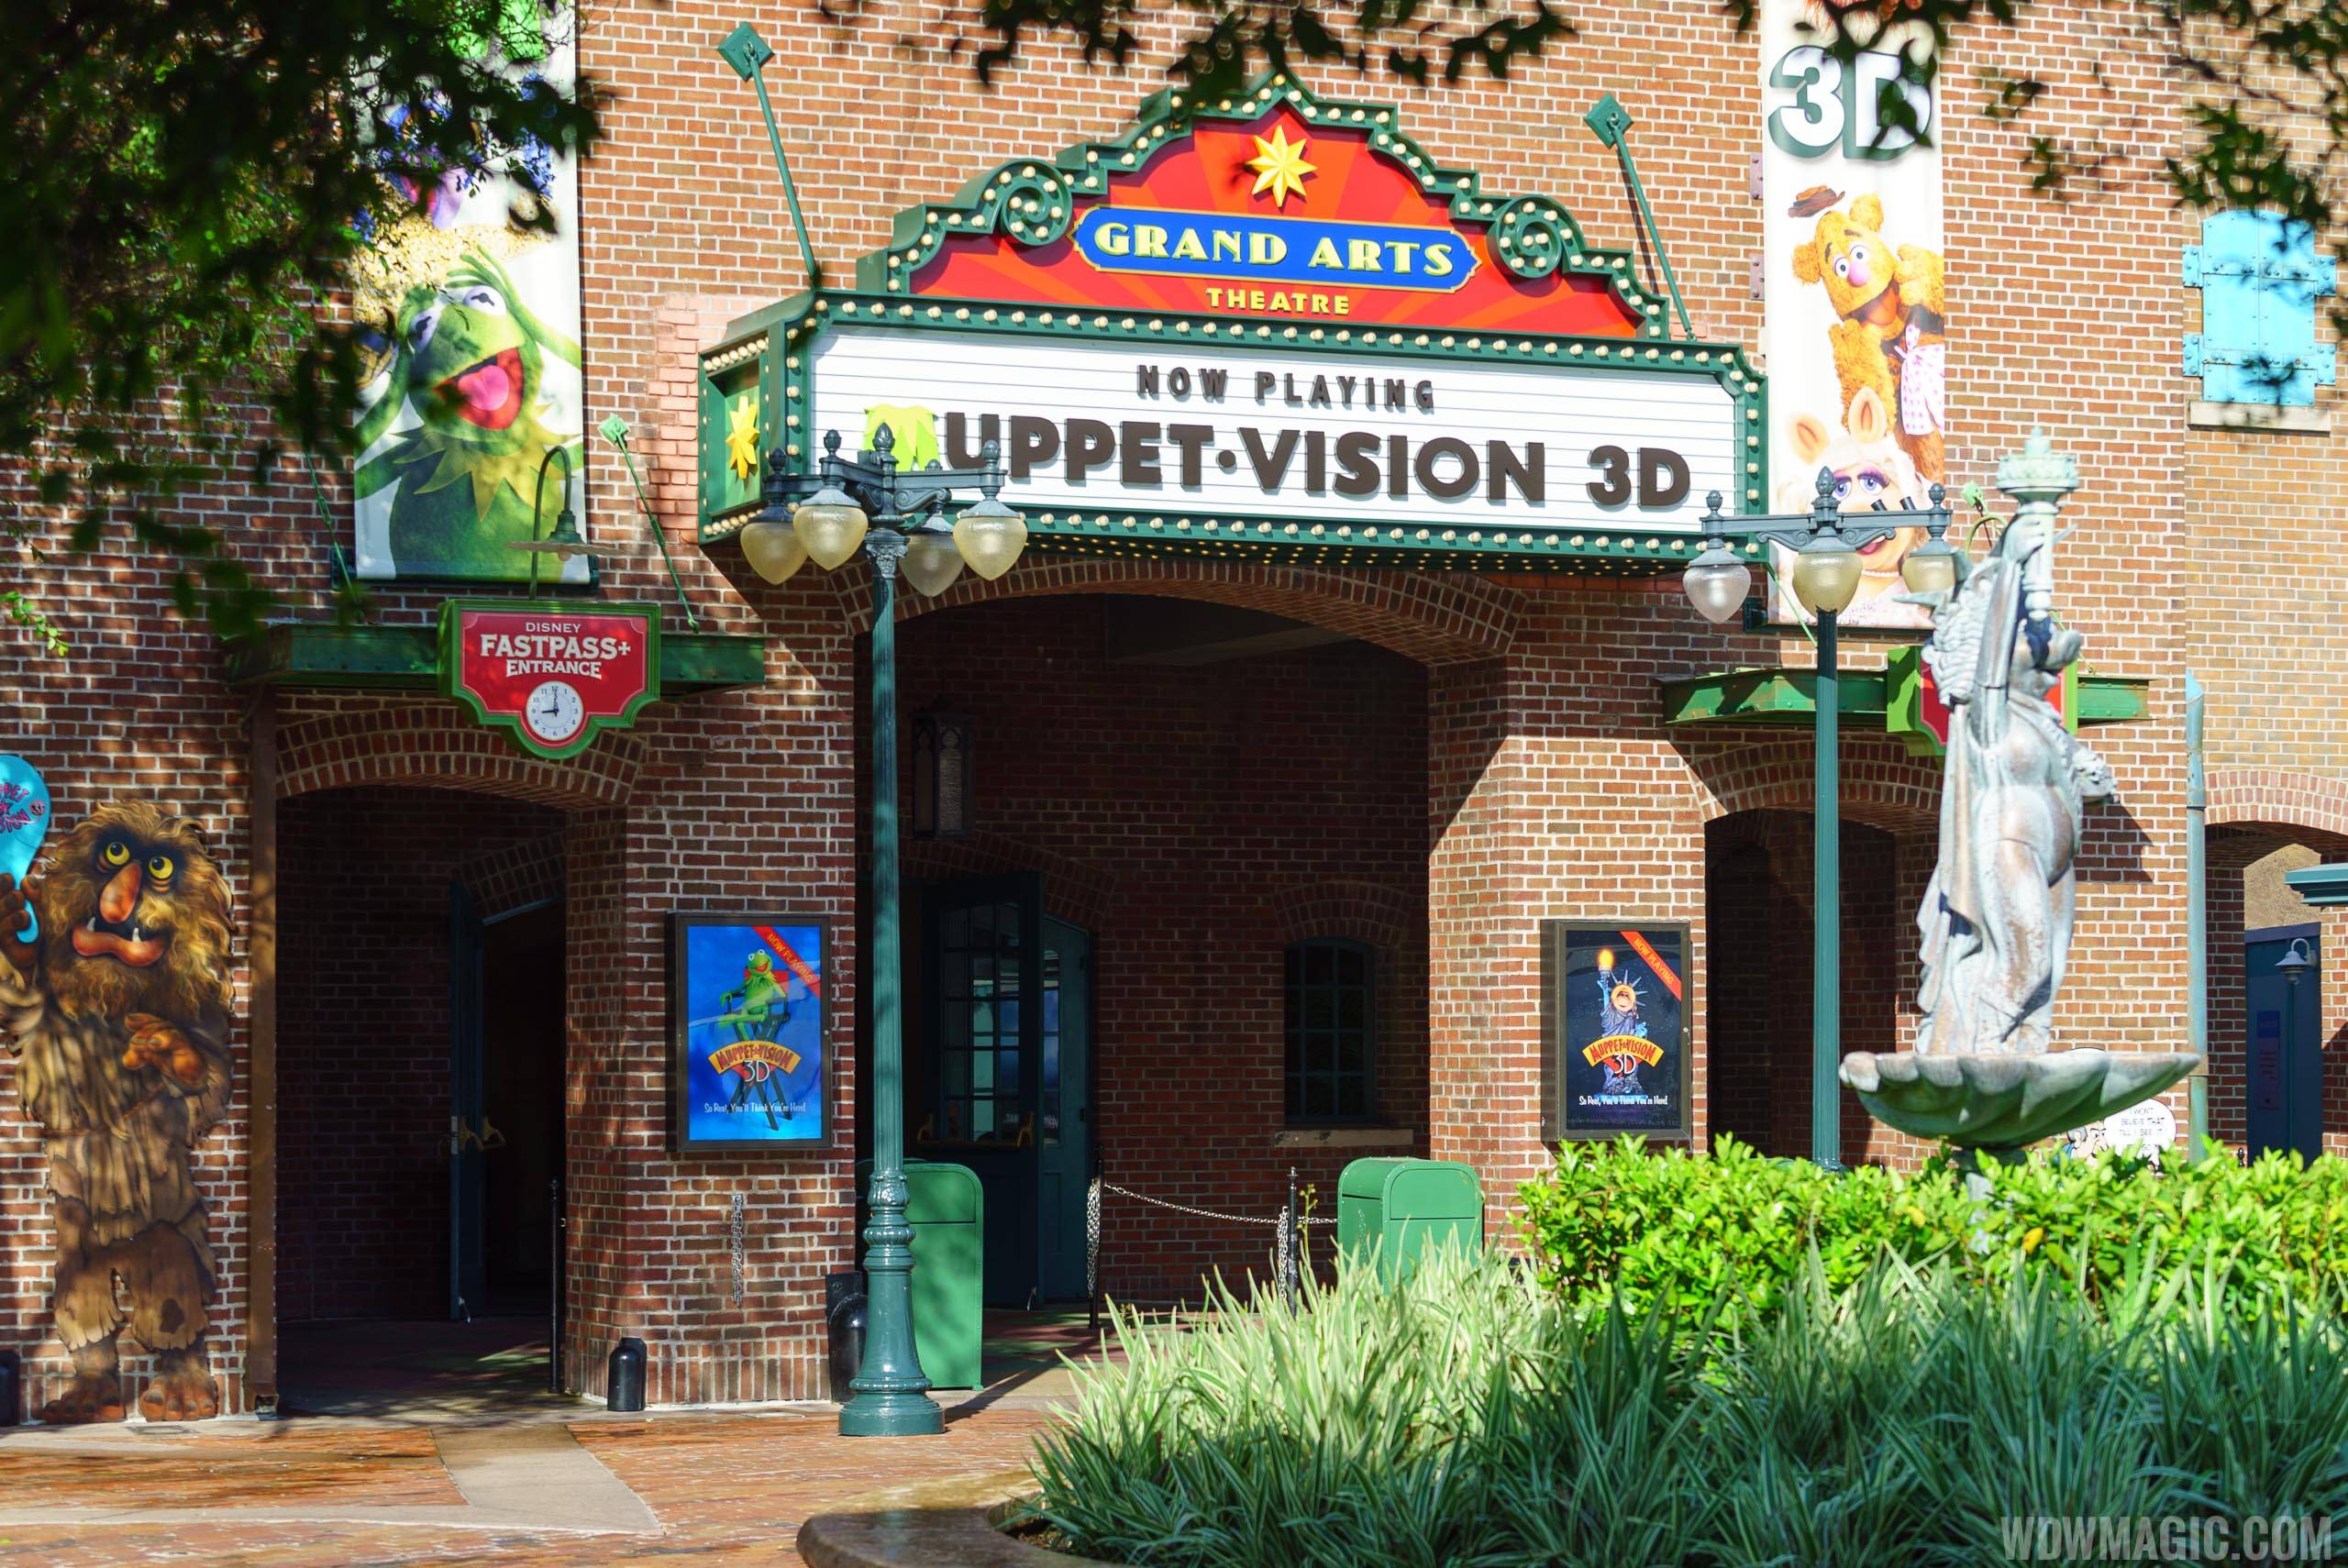 Jim Henson's MuppetVision 3D closing for refurbishment in August